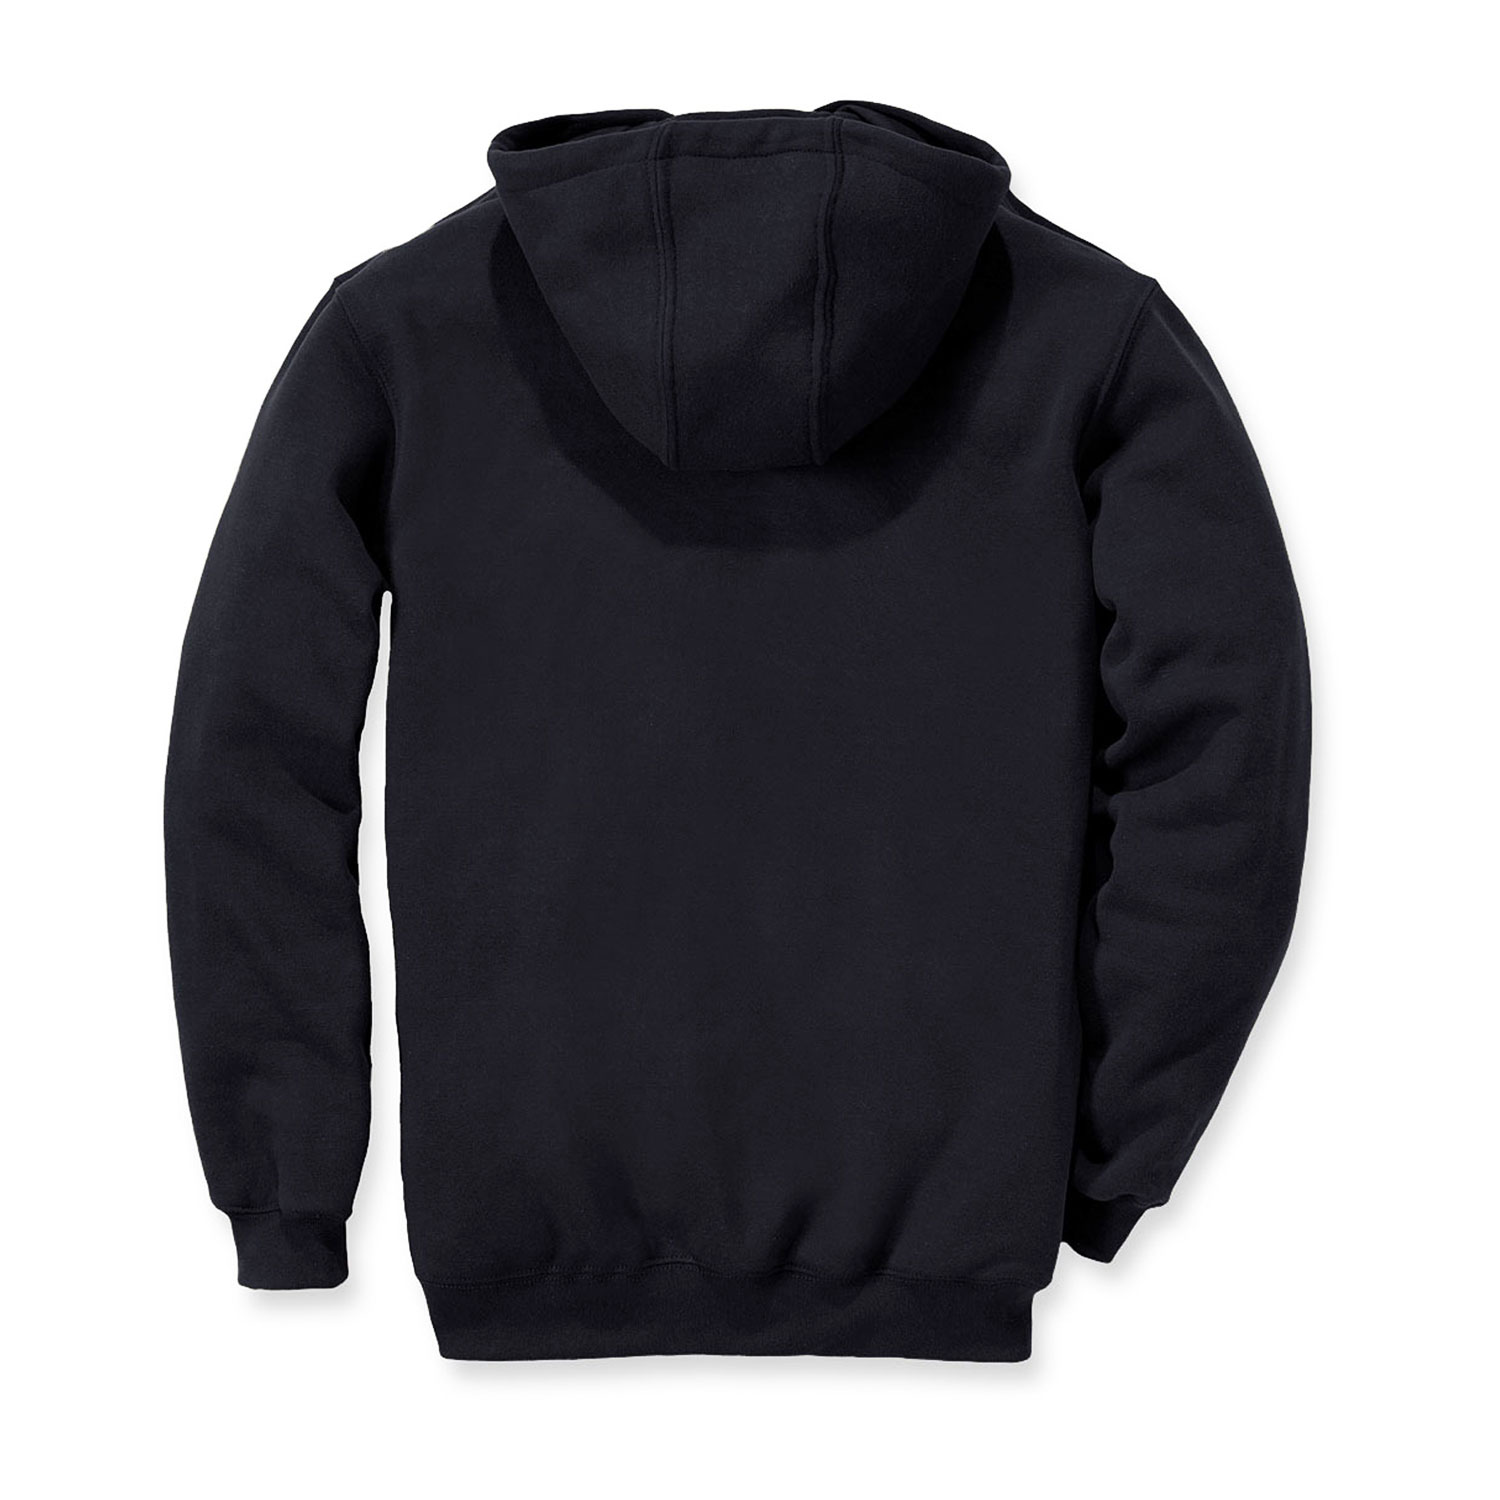 Carhartt K121 Hoodie Sweatshirt mit Kapuze schwarz S